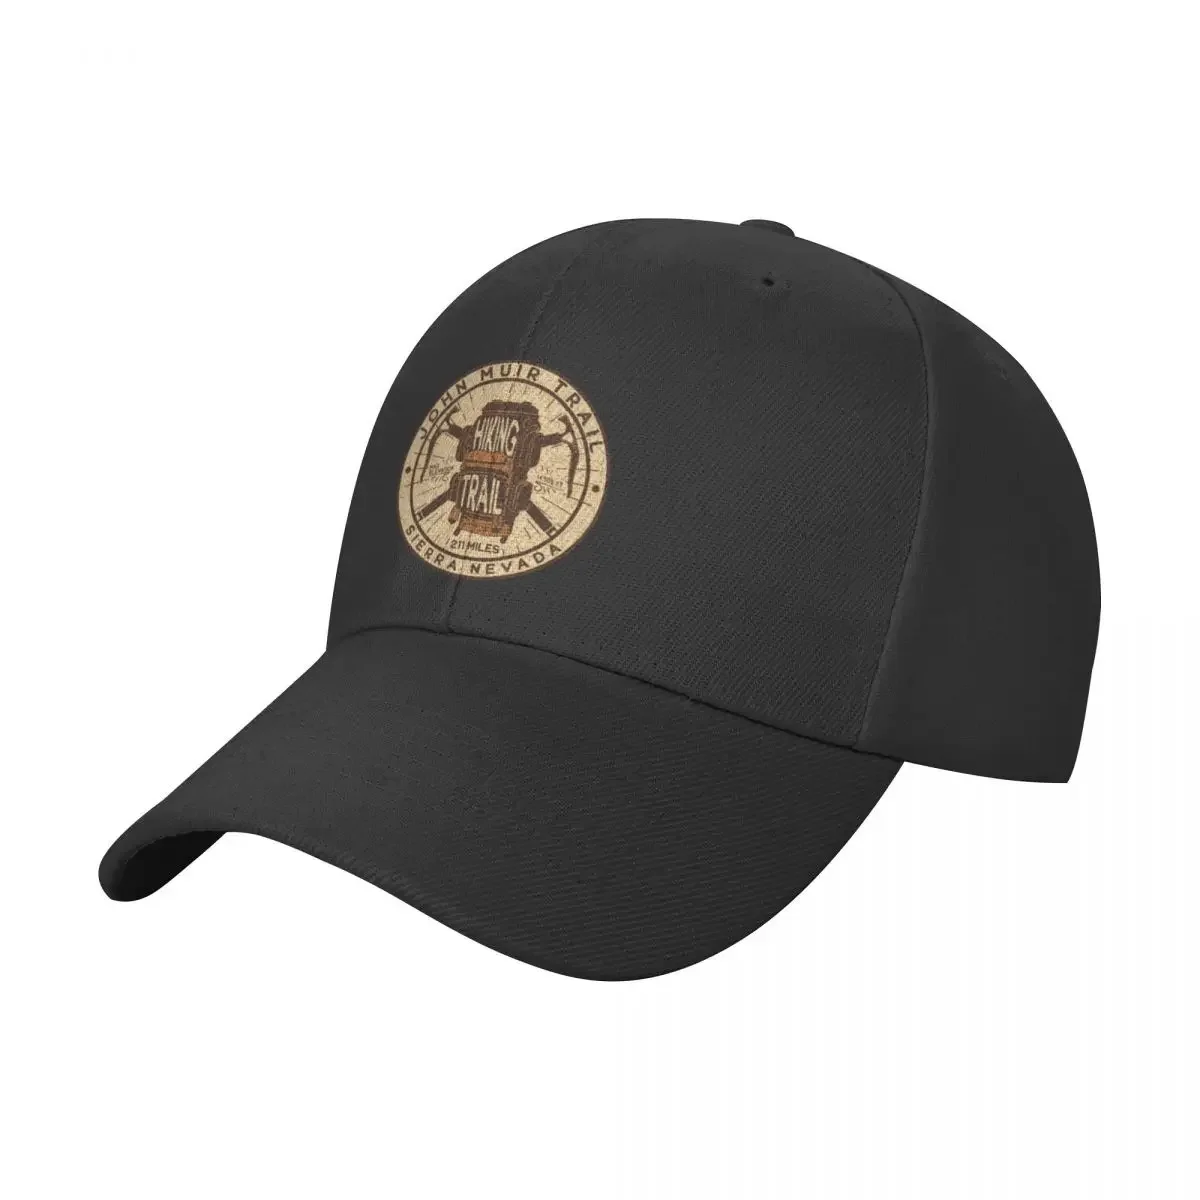 John Muir Trail Sierra Nevada Baseball Cap Luxury Hat Golf Hat Man Women... - $29.16